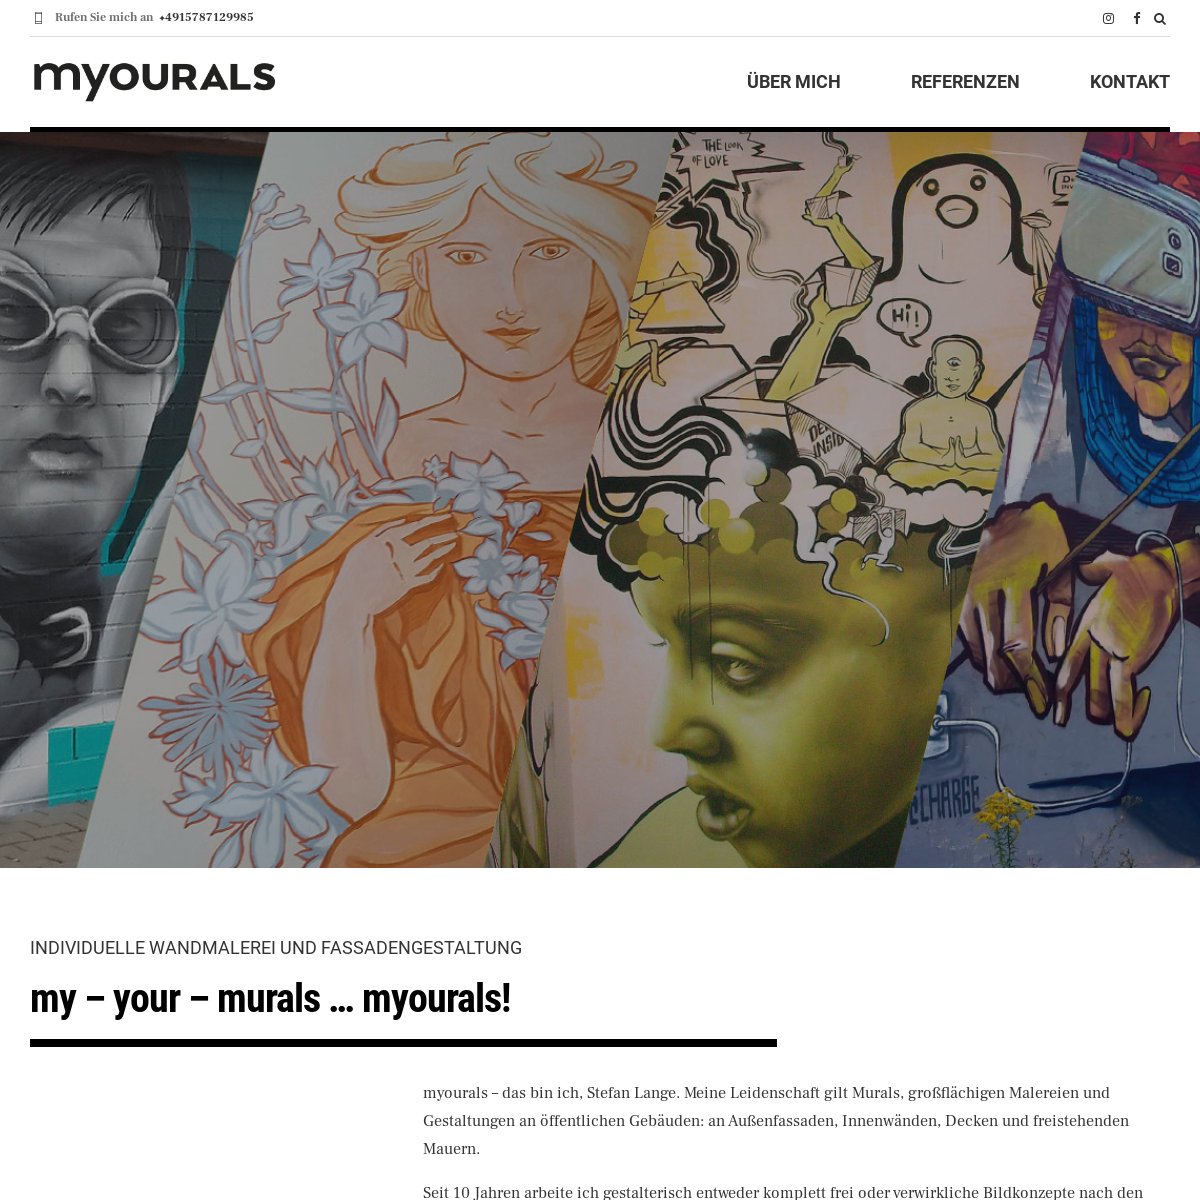 A complete backup of myourals.com